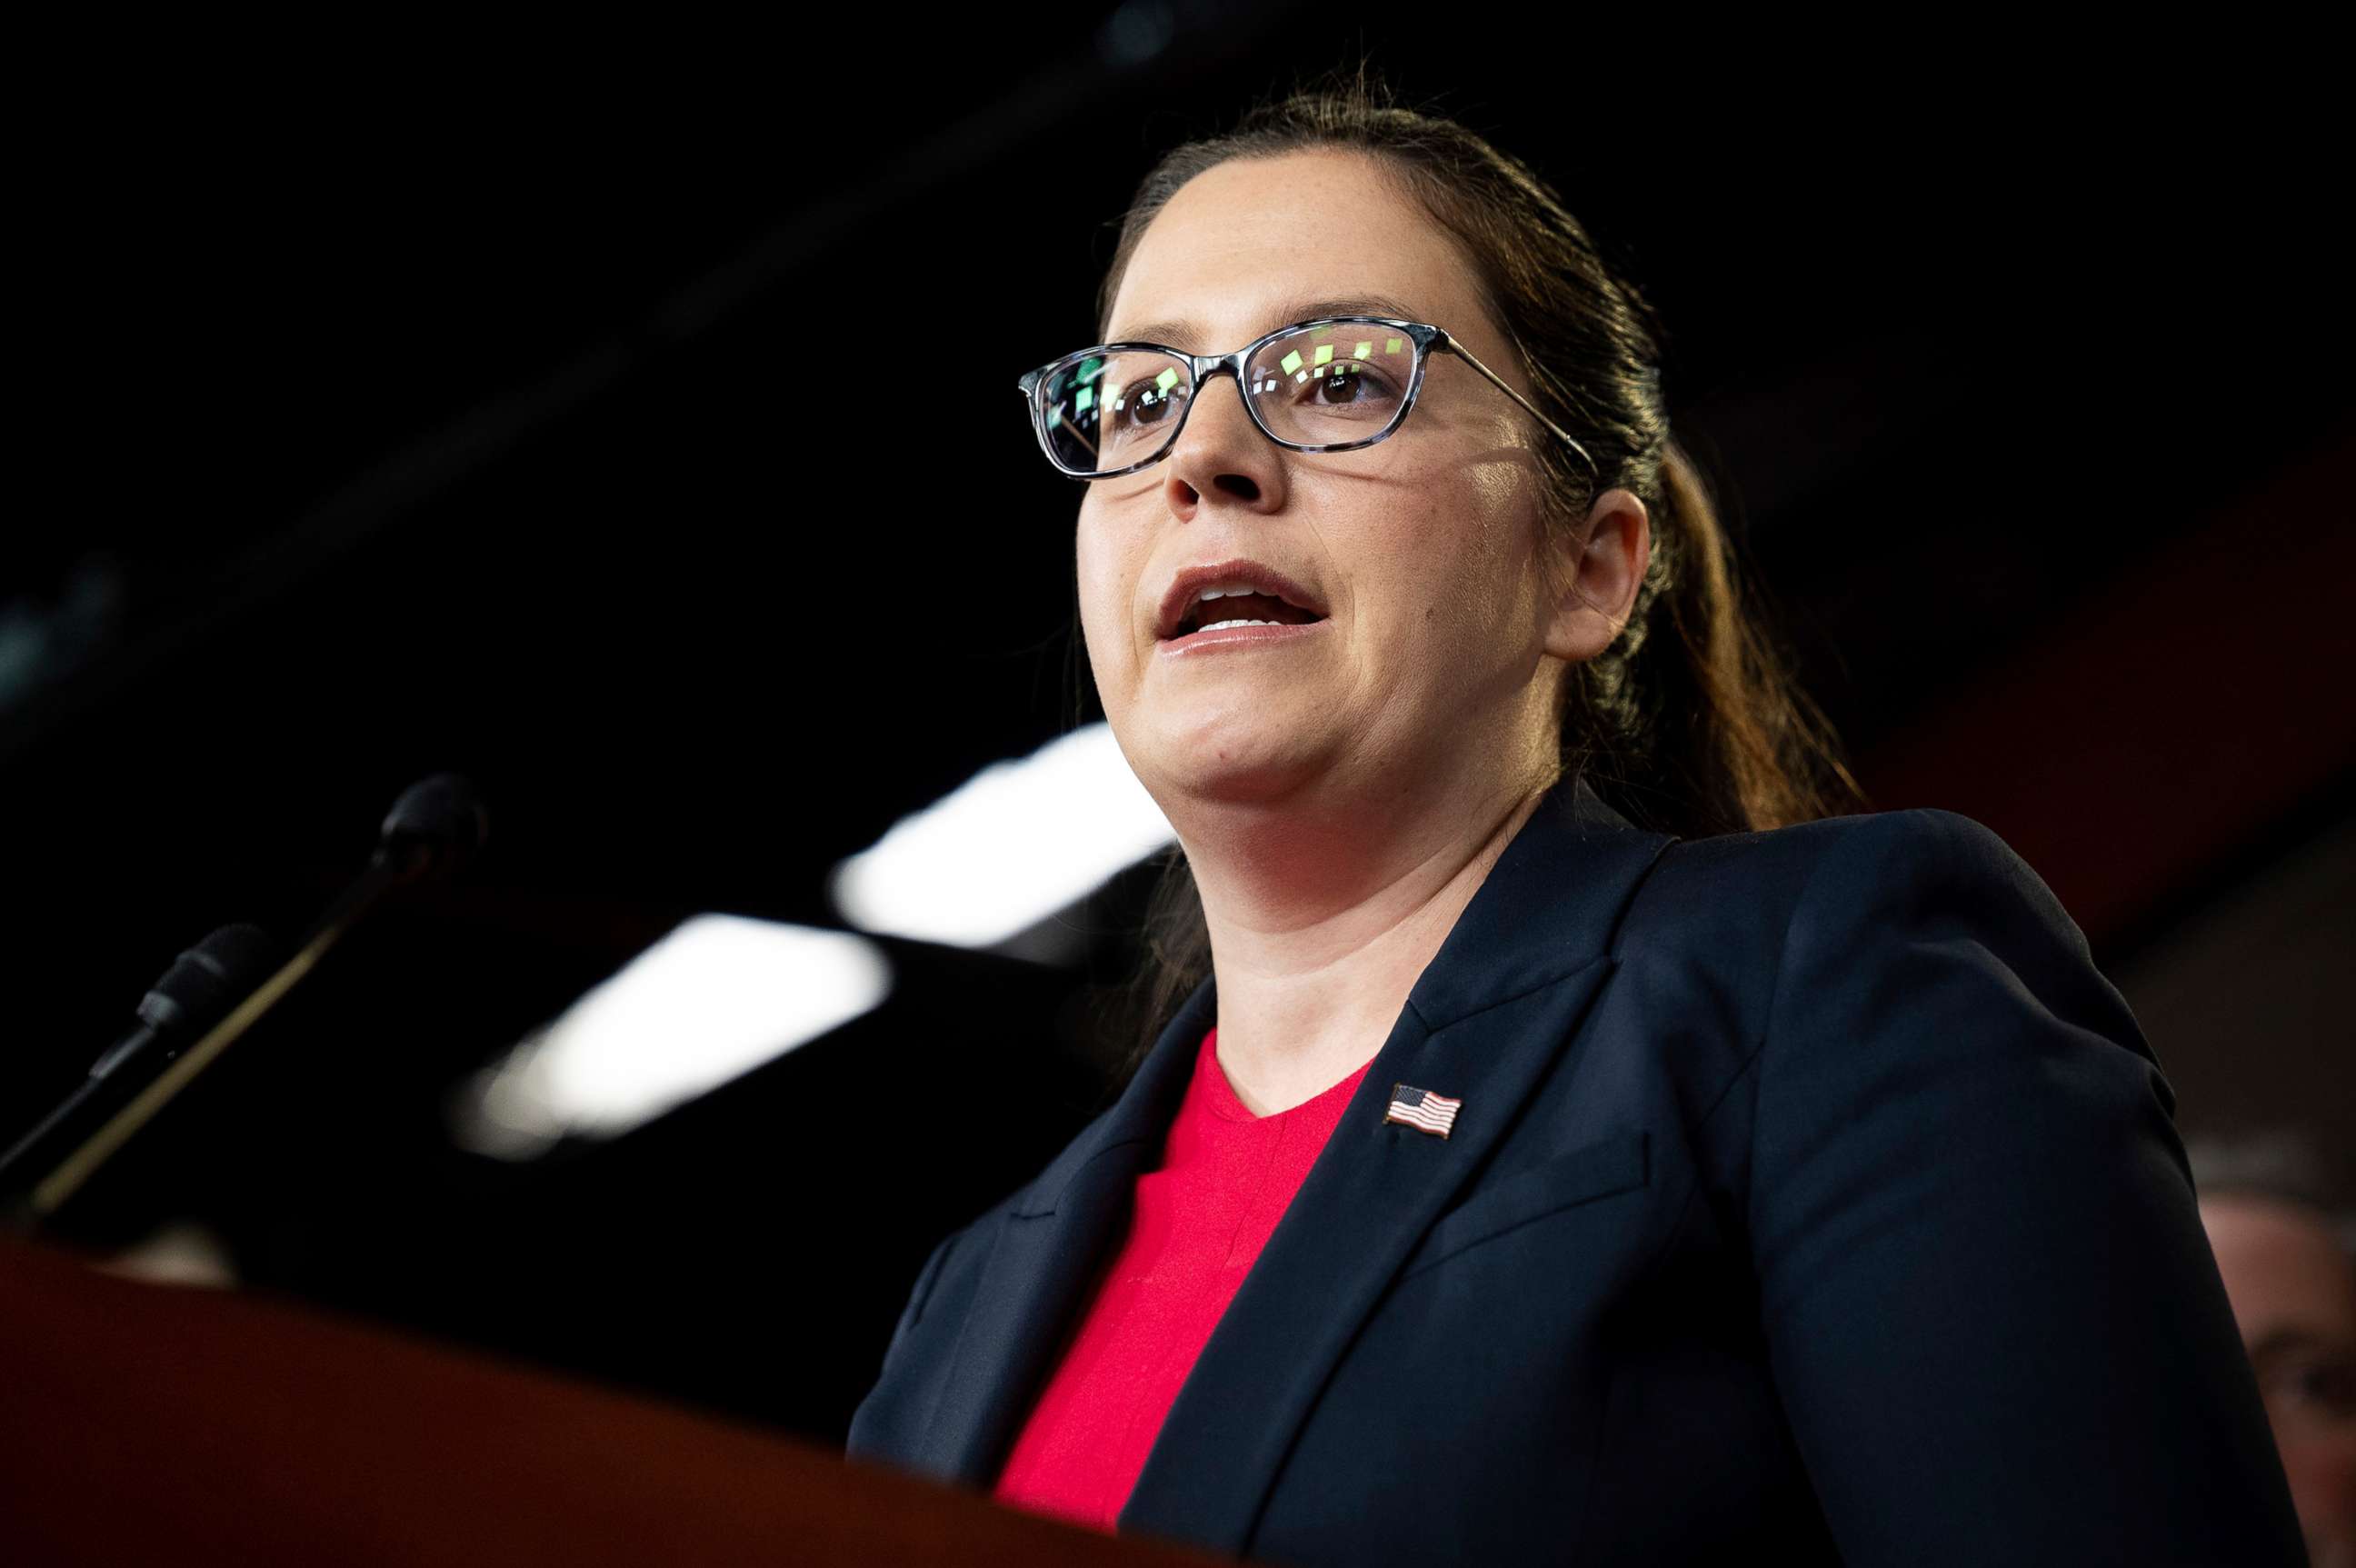 PHOTO: Representative Elise Stefanik speaks at a press conference in Washington, April 5, 2022.